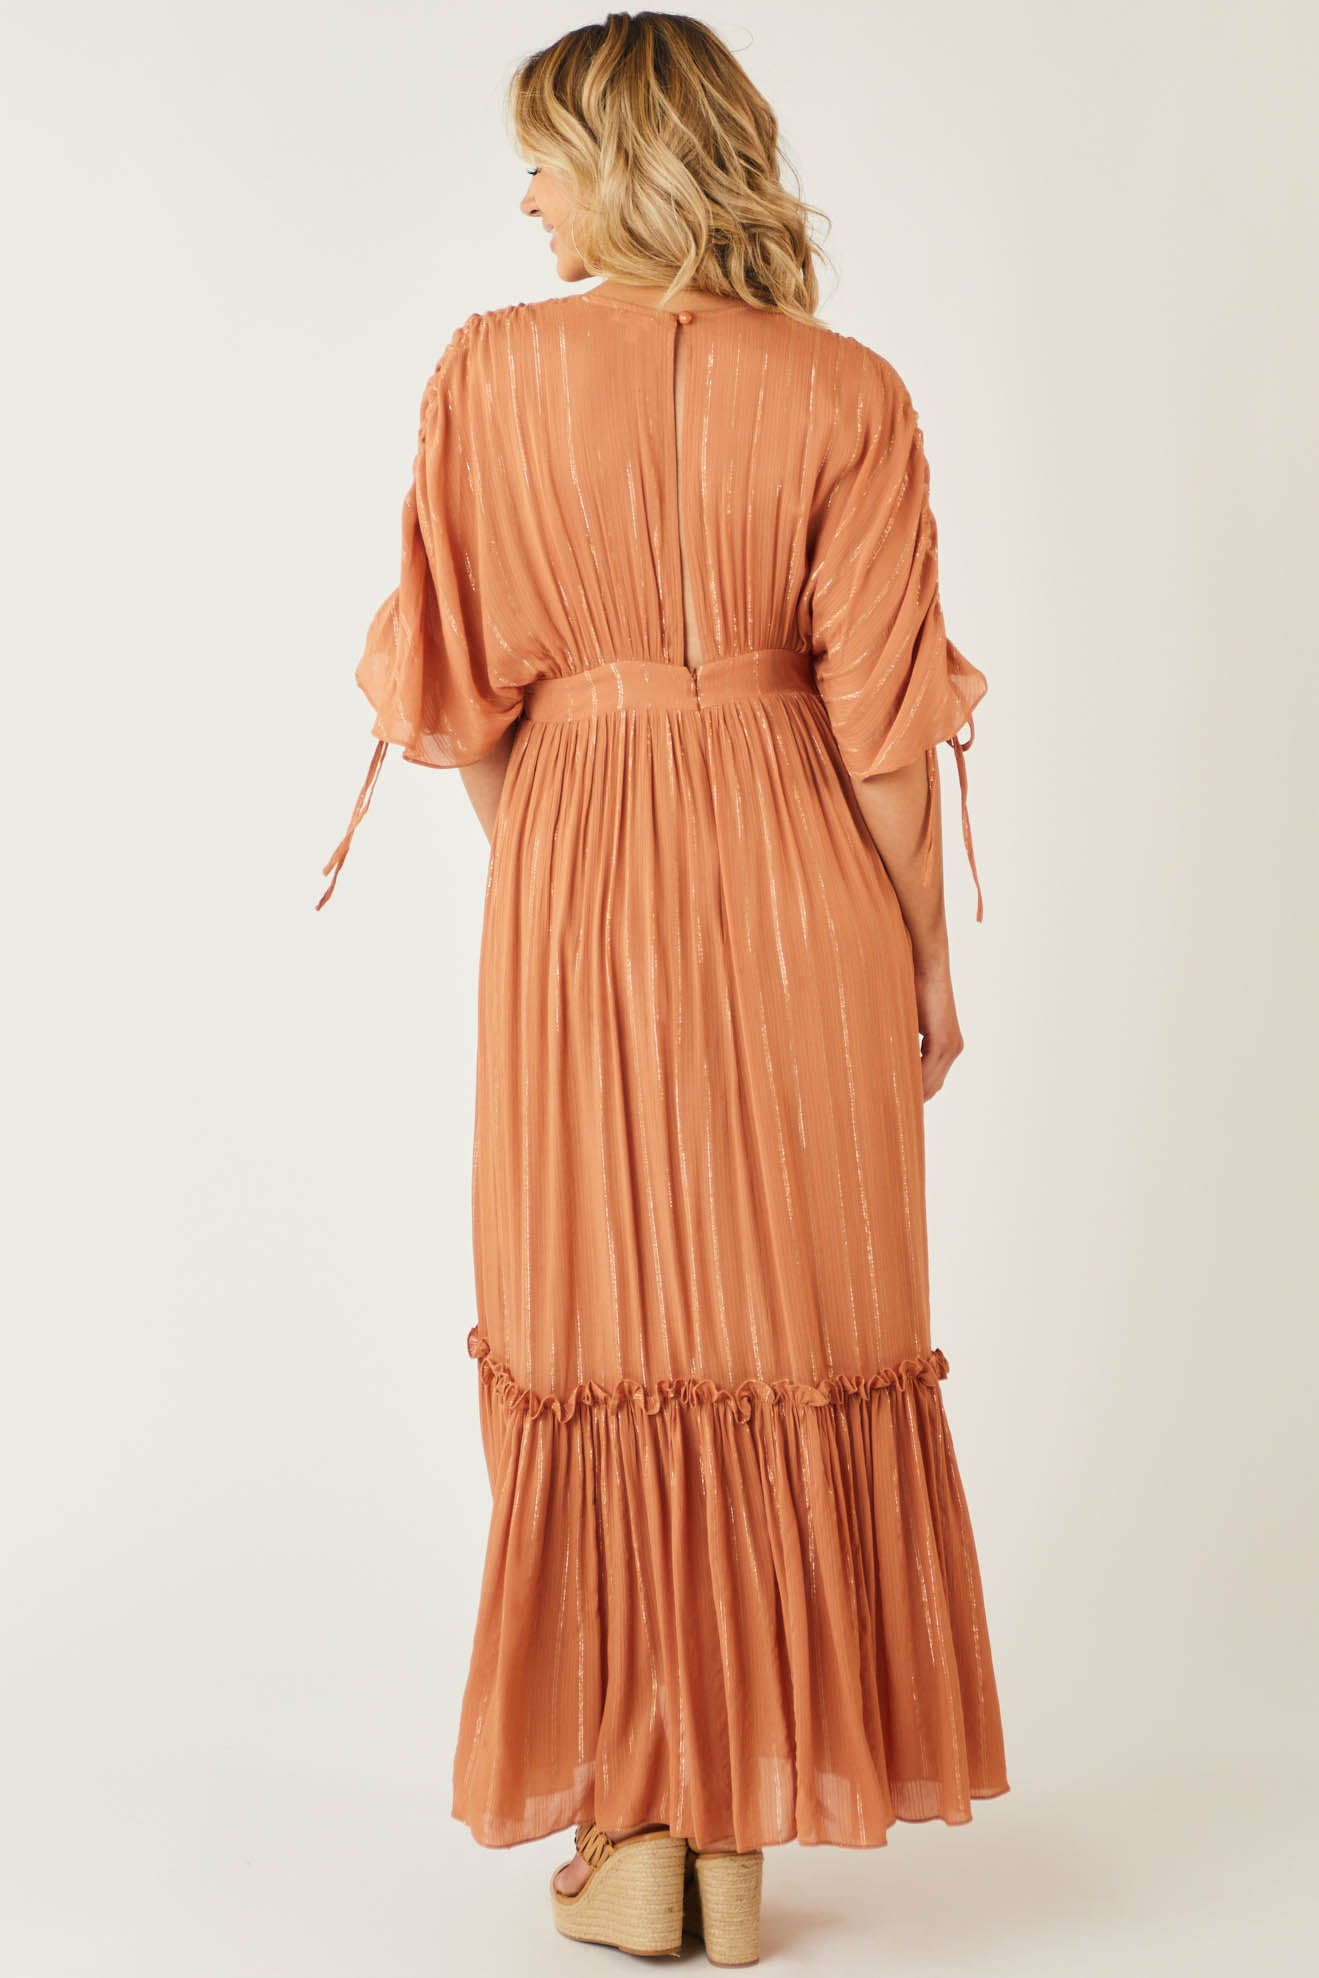 Pale Sandstone Metallic Threaded Woven Maxi Dress